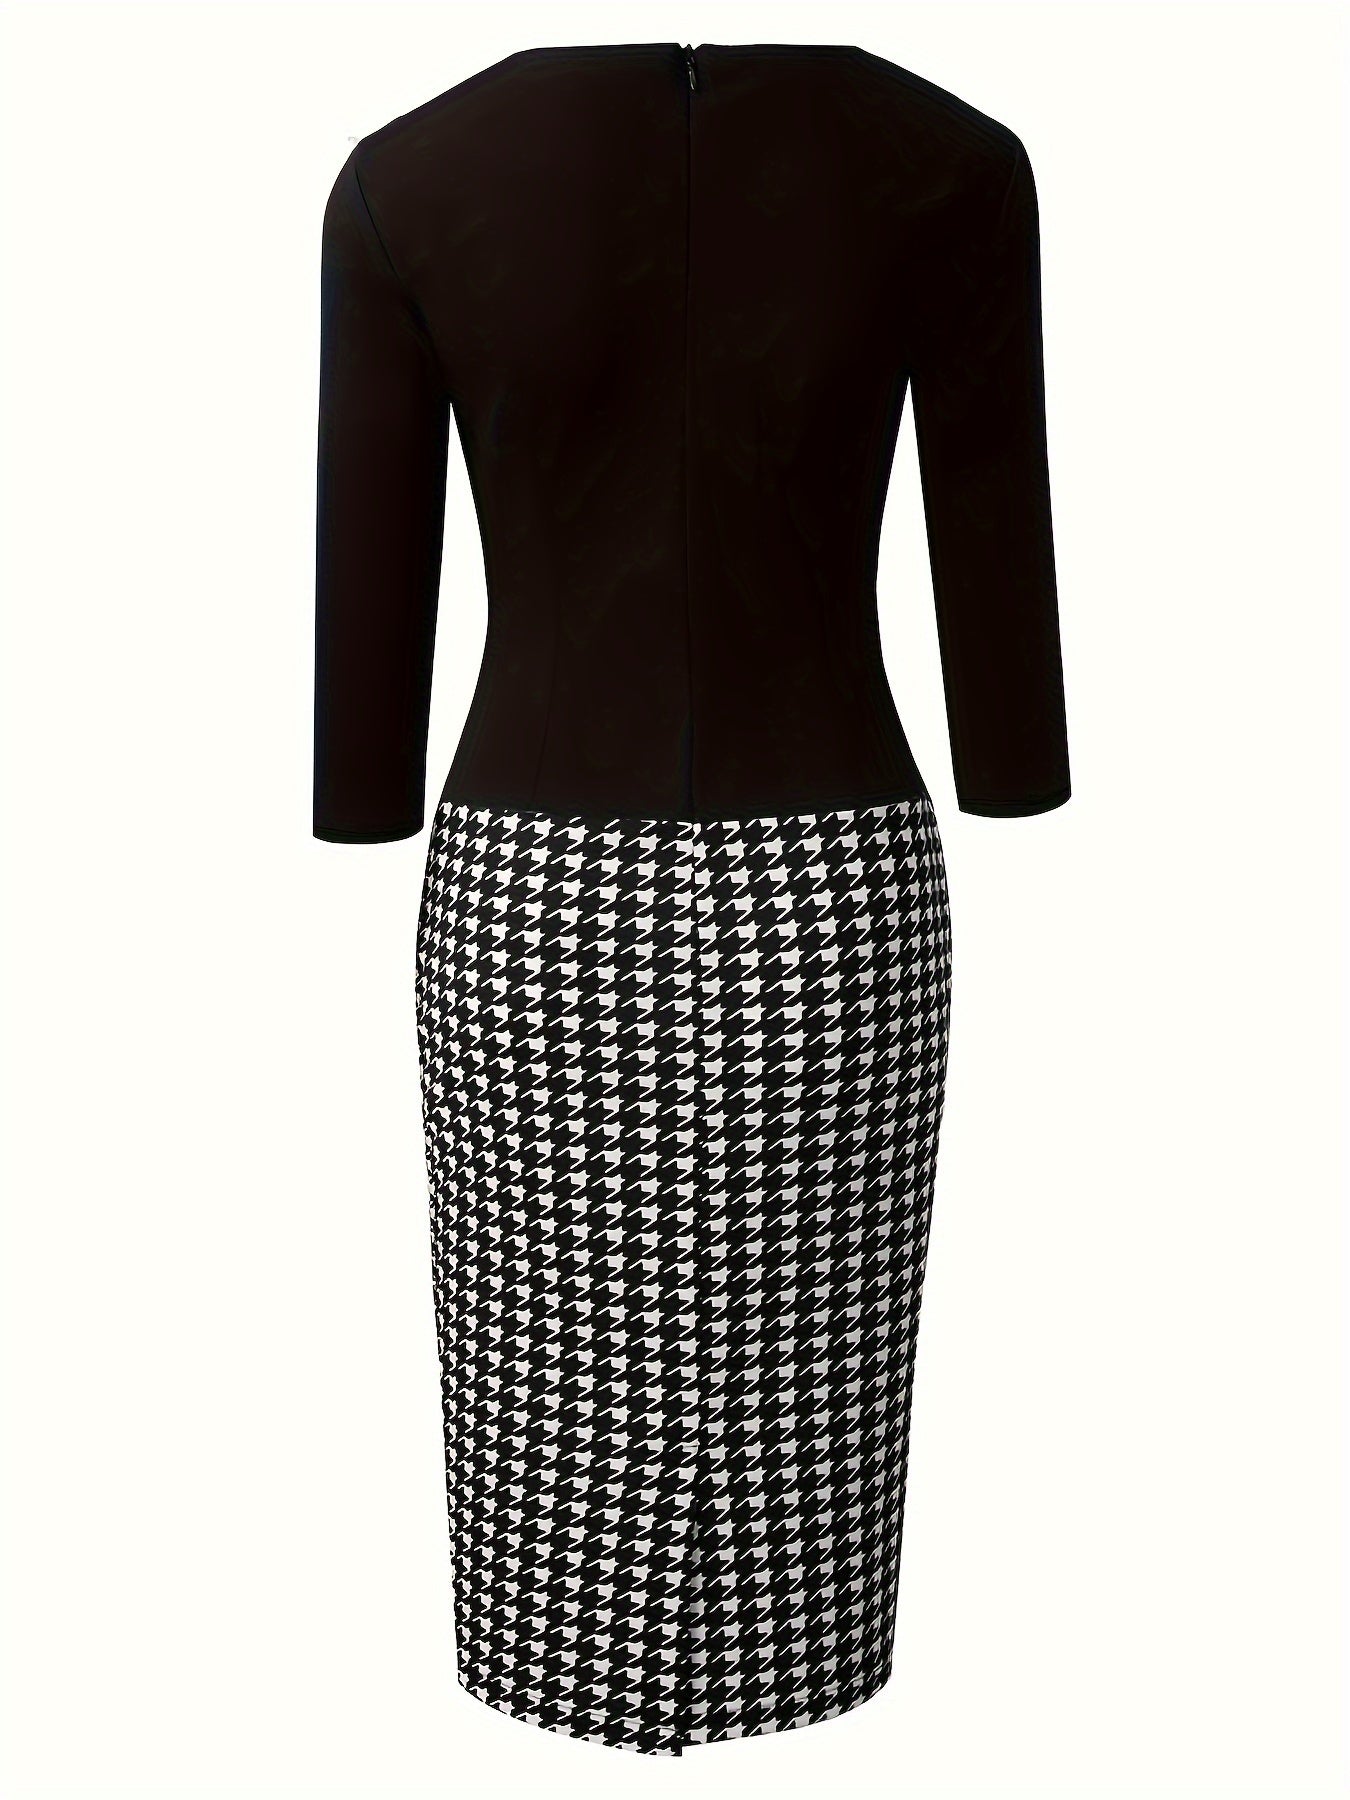 Houndstooth Print Stitching Dress, Elegant 3/4 Sleeve Work Office Dress, Women's Clothing